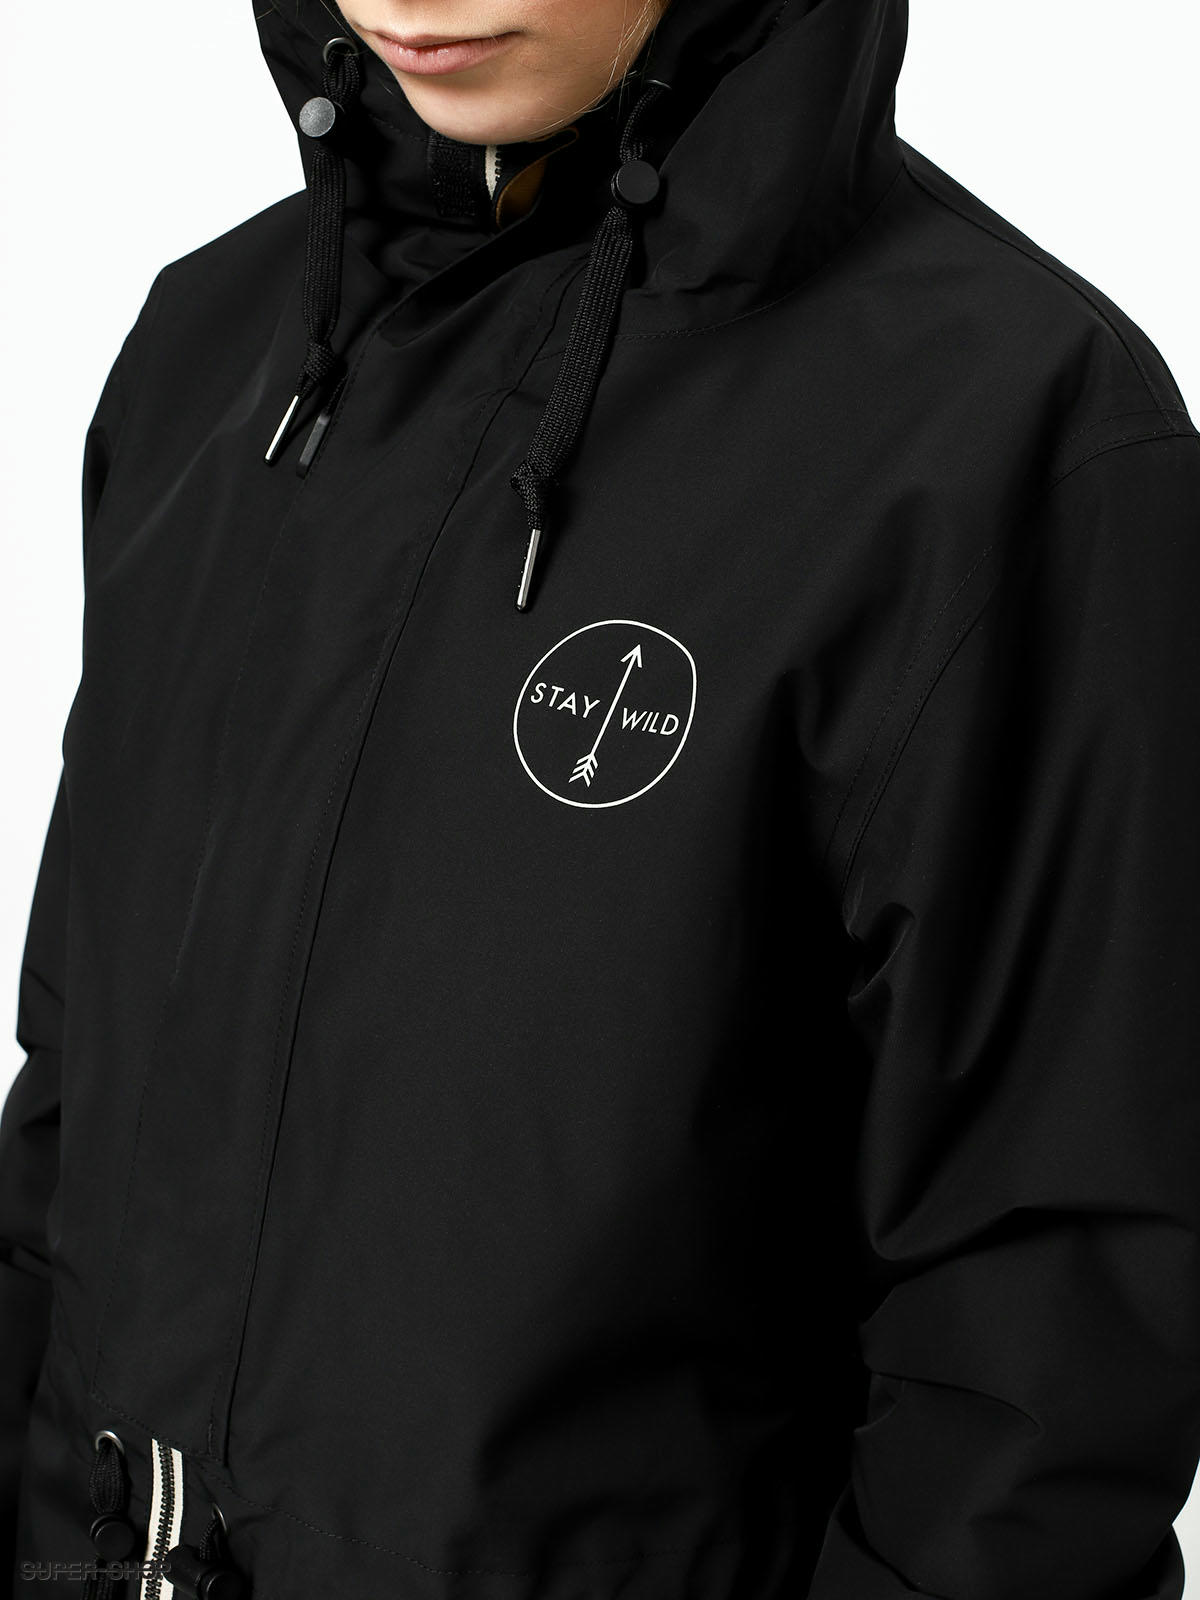 Airblaster Stay Wild Parka Snowboard jacket Wmn (black)